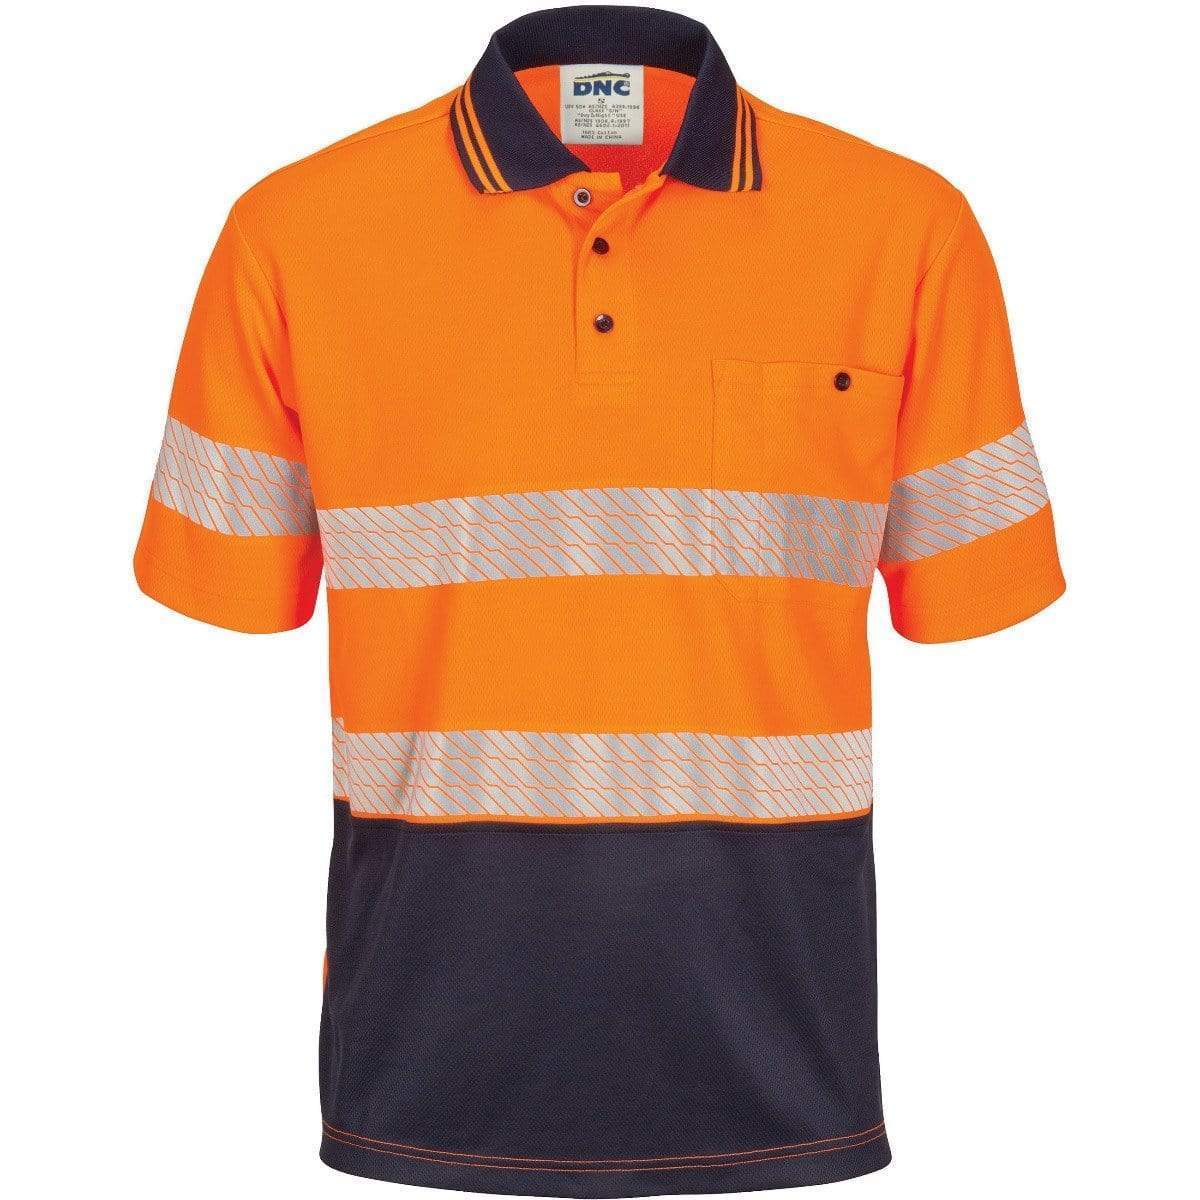 Dnc Workwear Hi-vis Segment Taped Short Sleeve Cotton Jersey Polo - 3511 Work Wear DNC Workwear Orange/Navy XS 